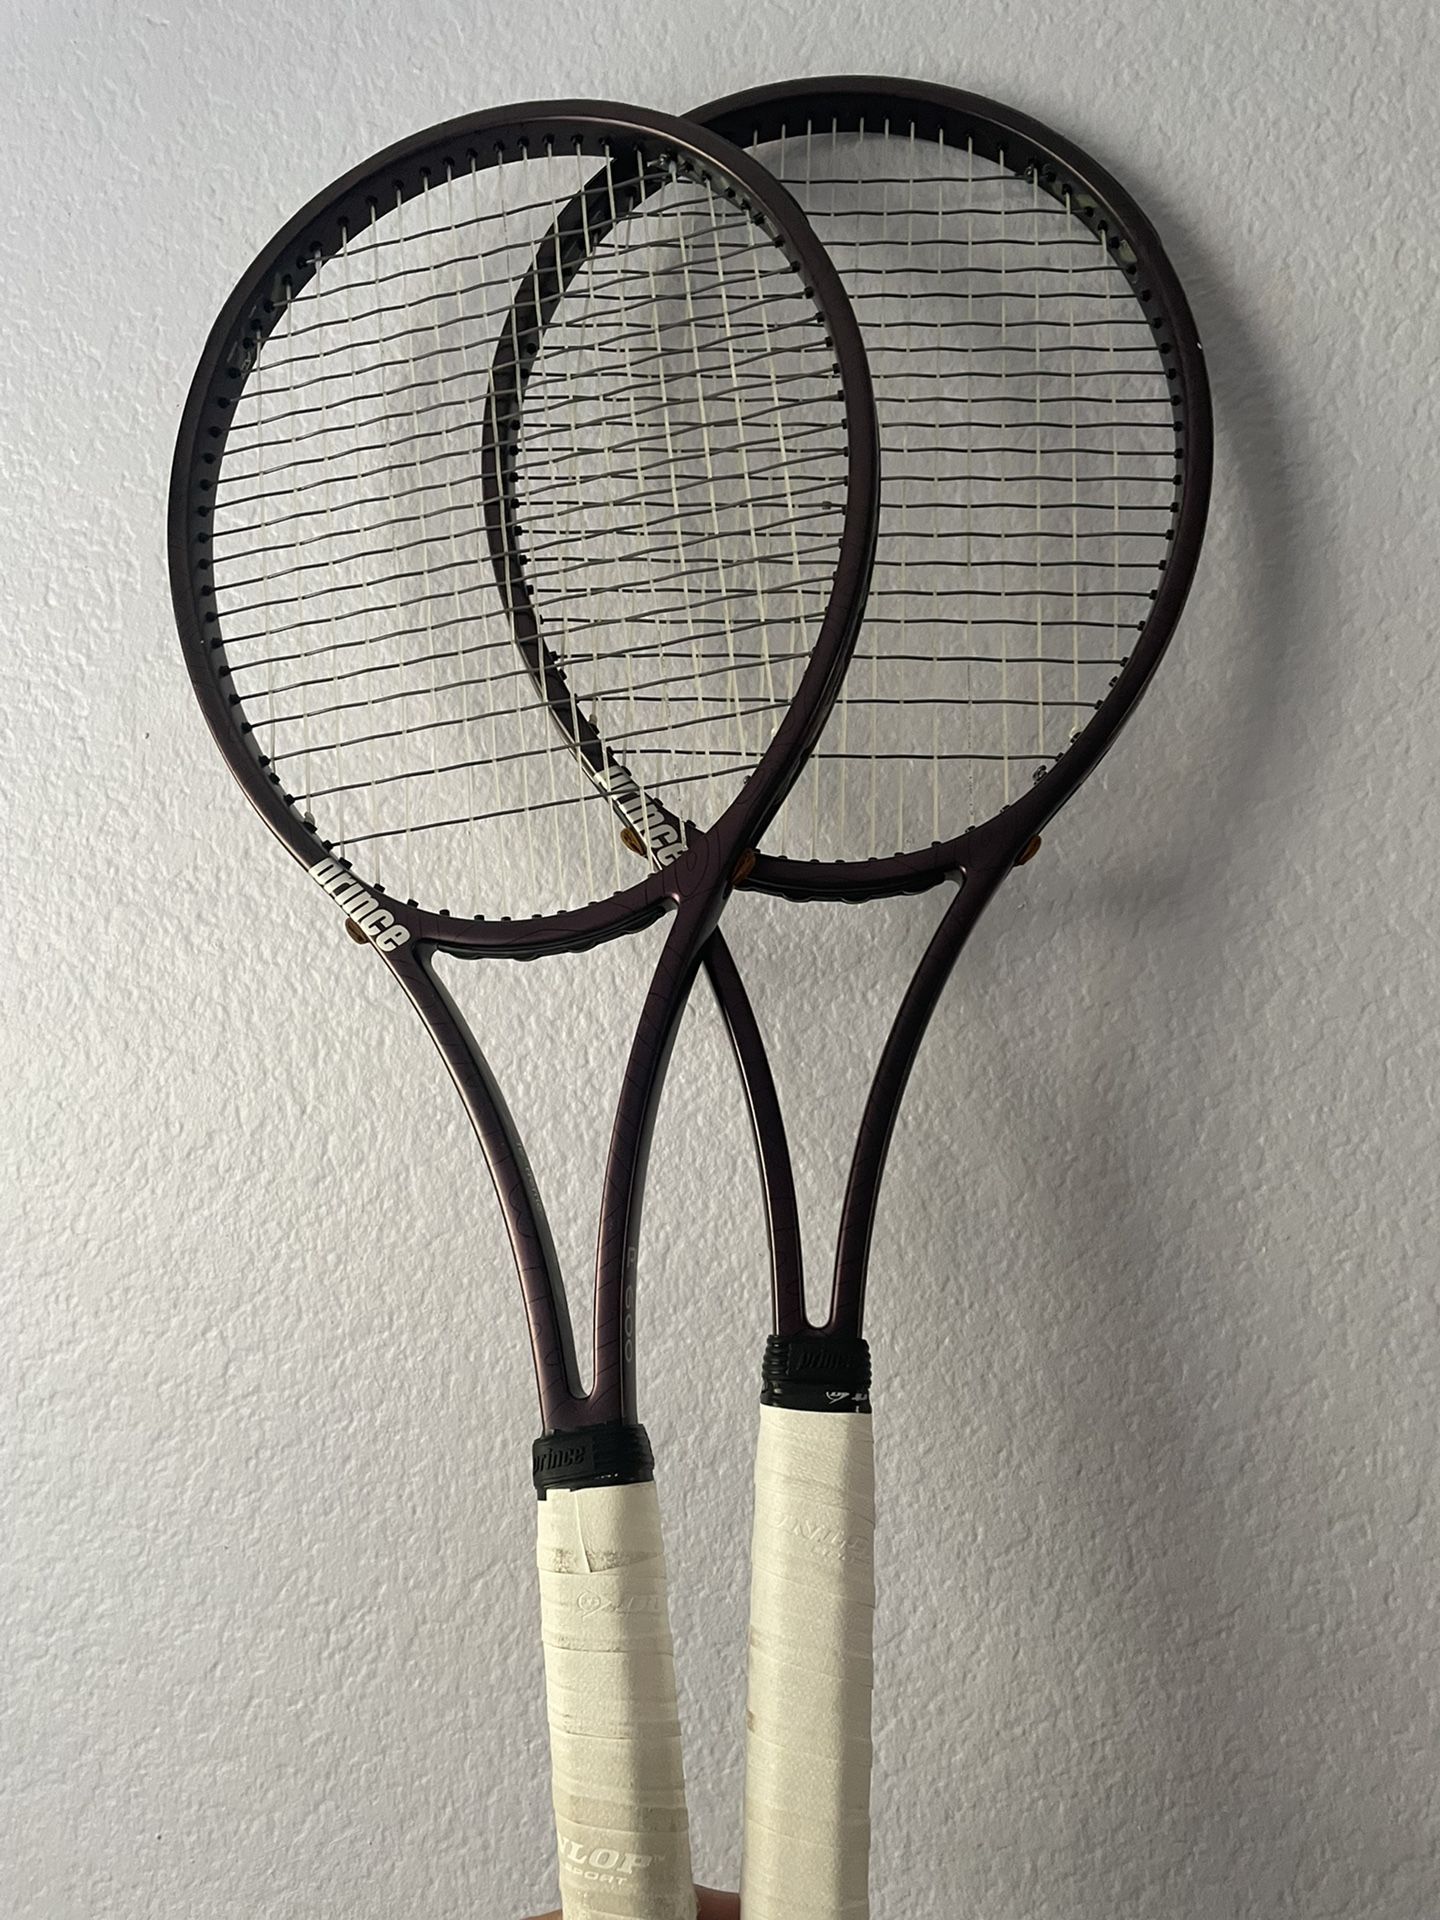 Tennis Racket (Prince Pro)